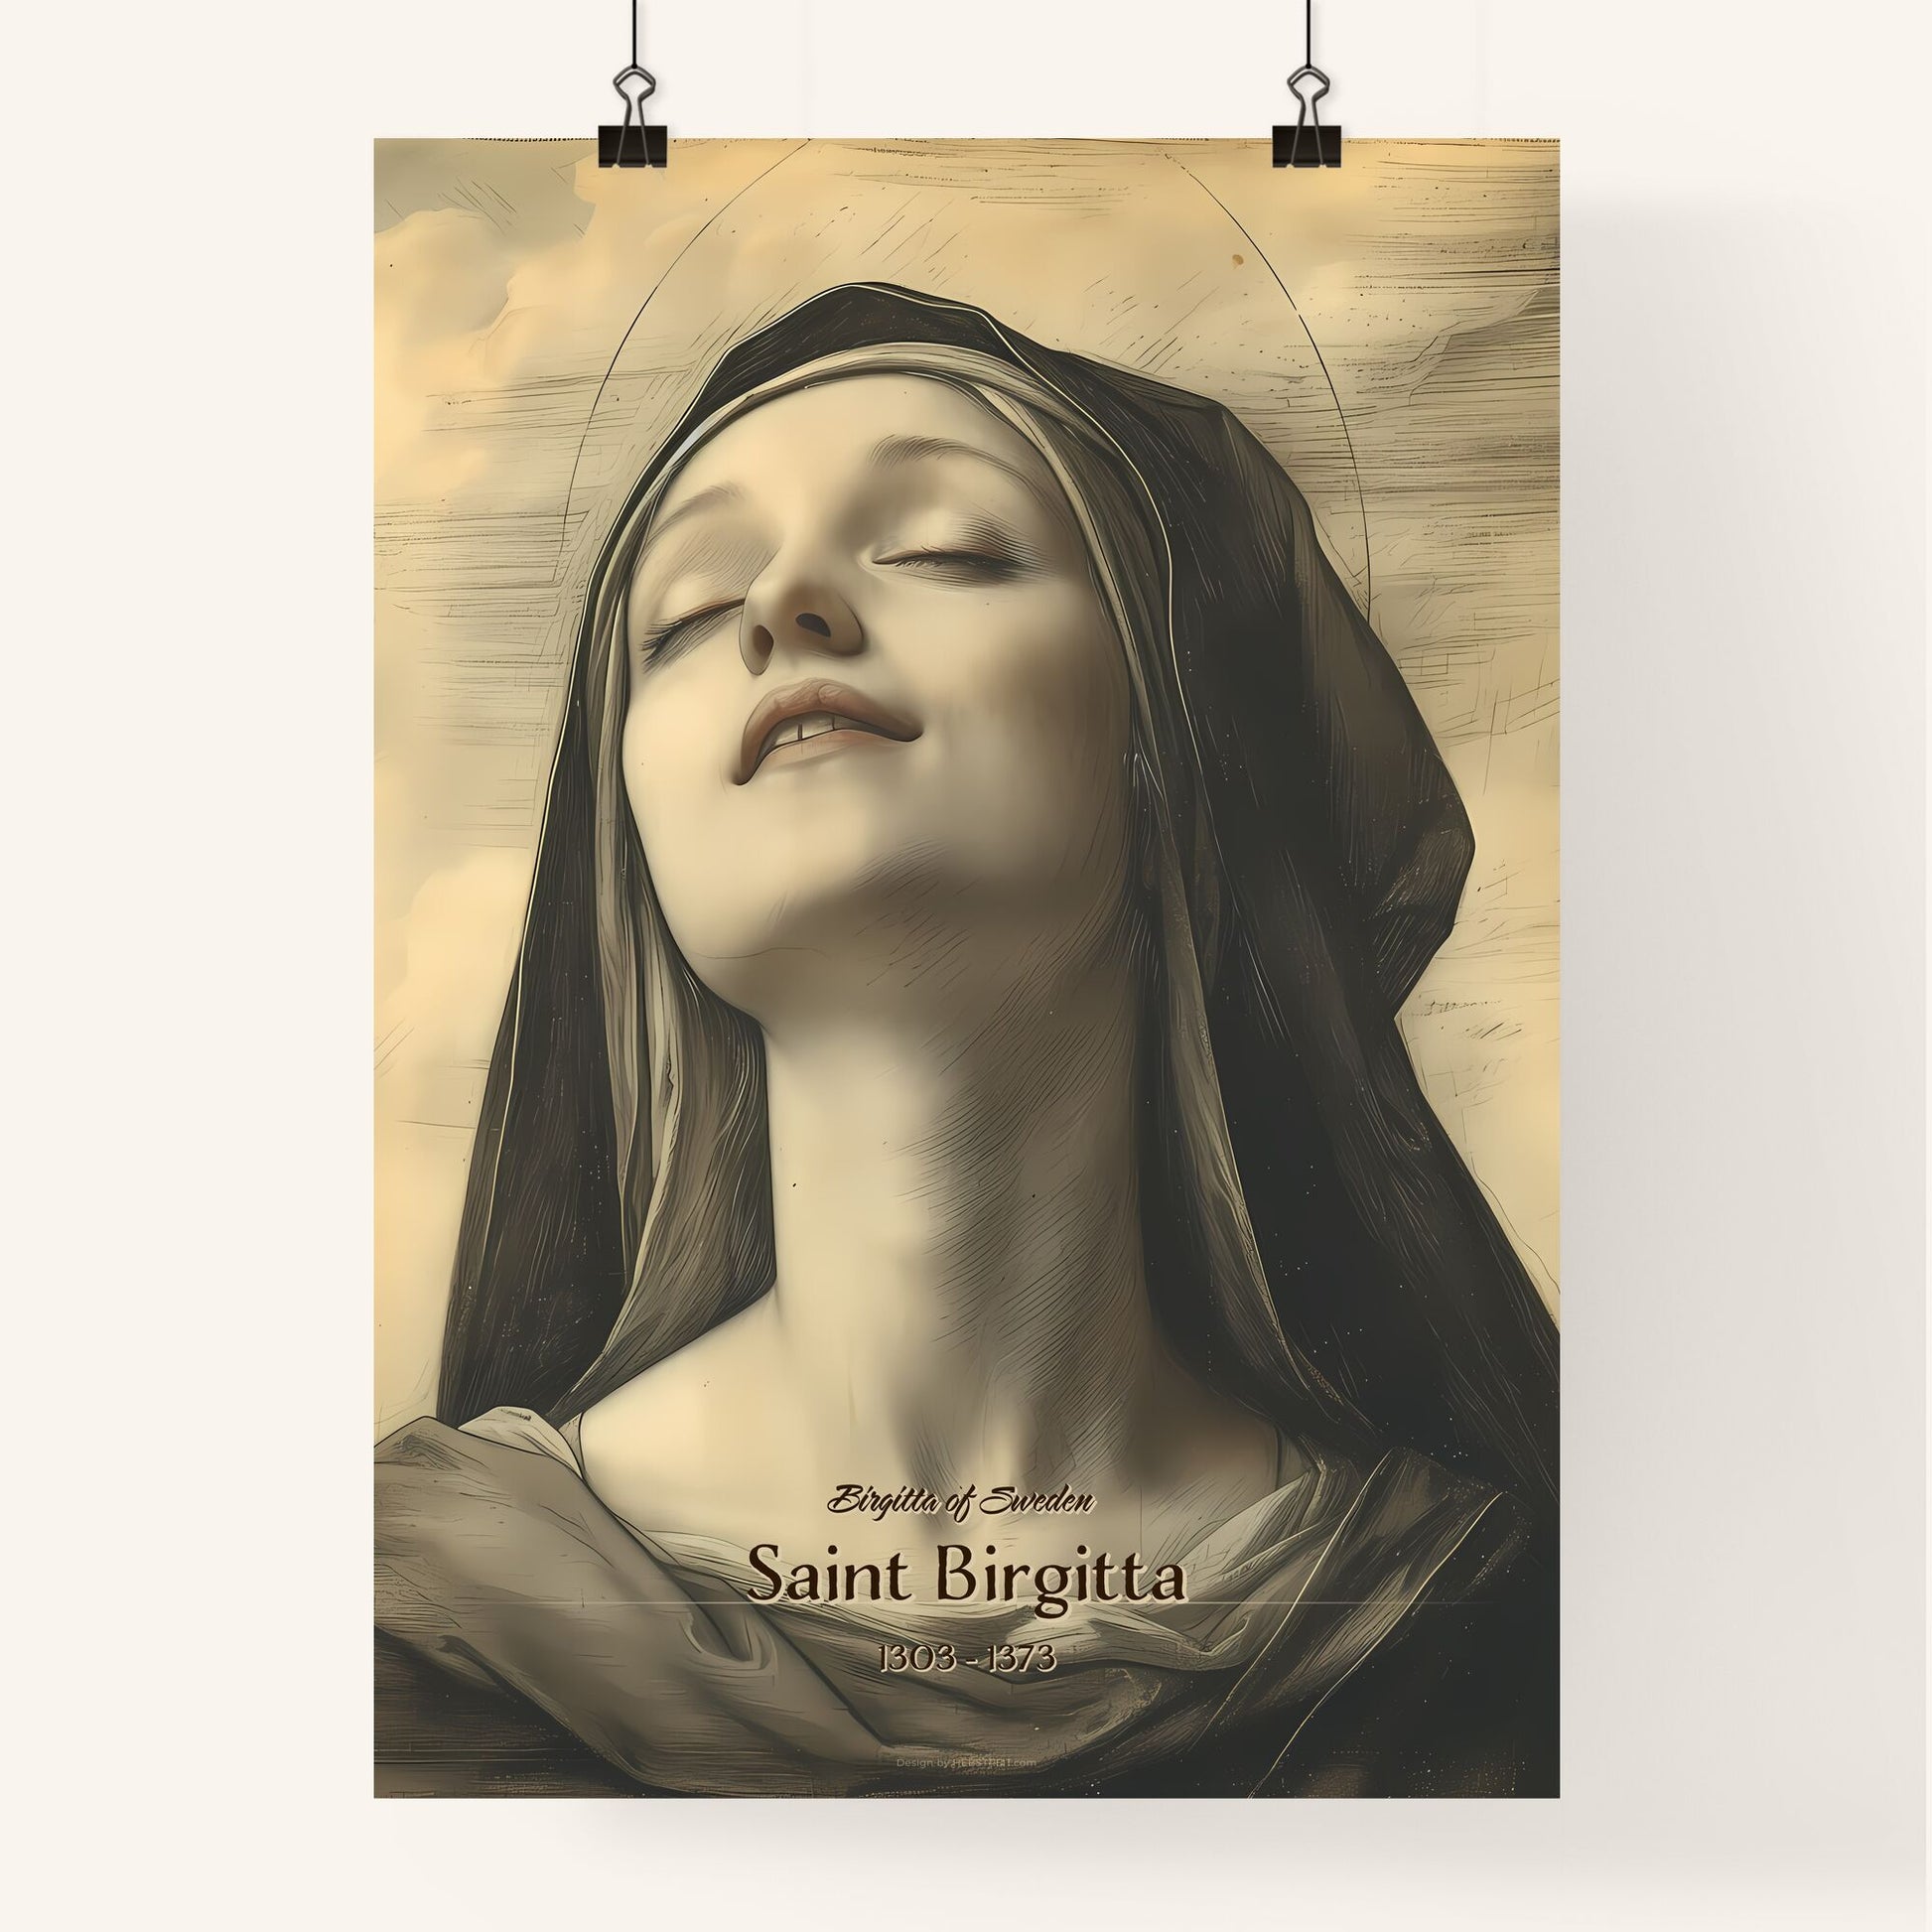 Birgitta of Sweden, Saint Birgitta, 1303 - 1373, A Poster of a woman with her eyes closed Default Title